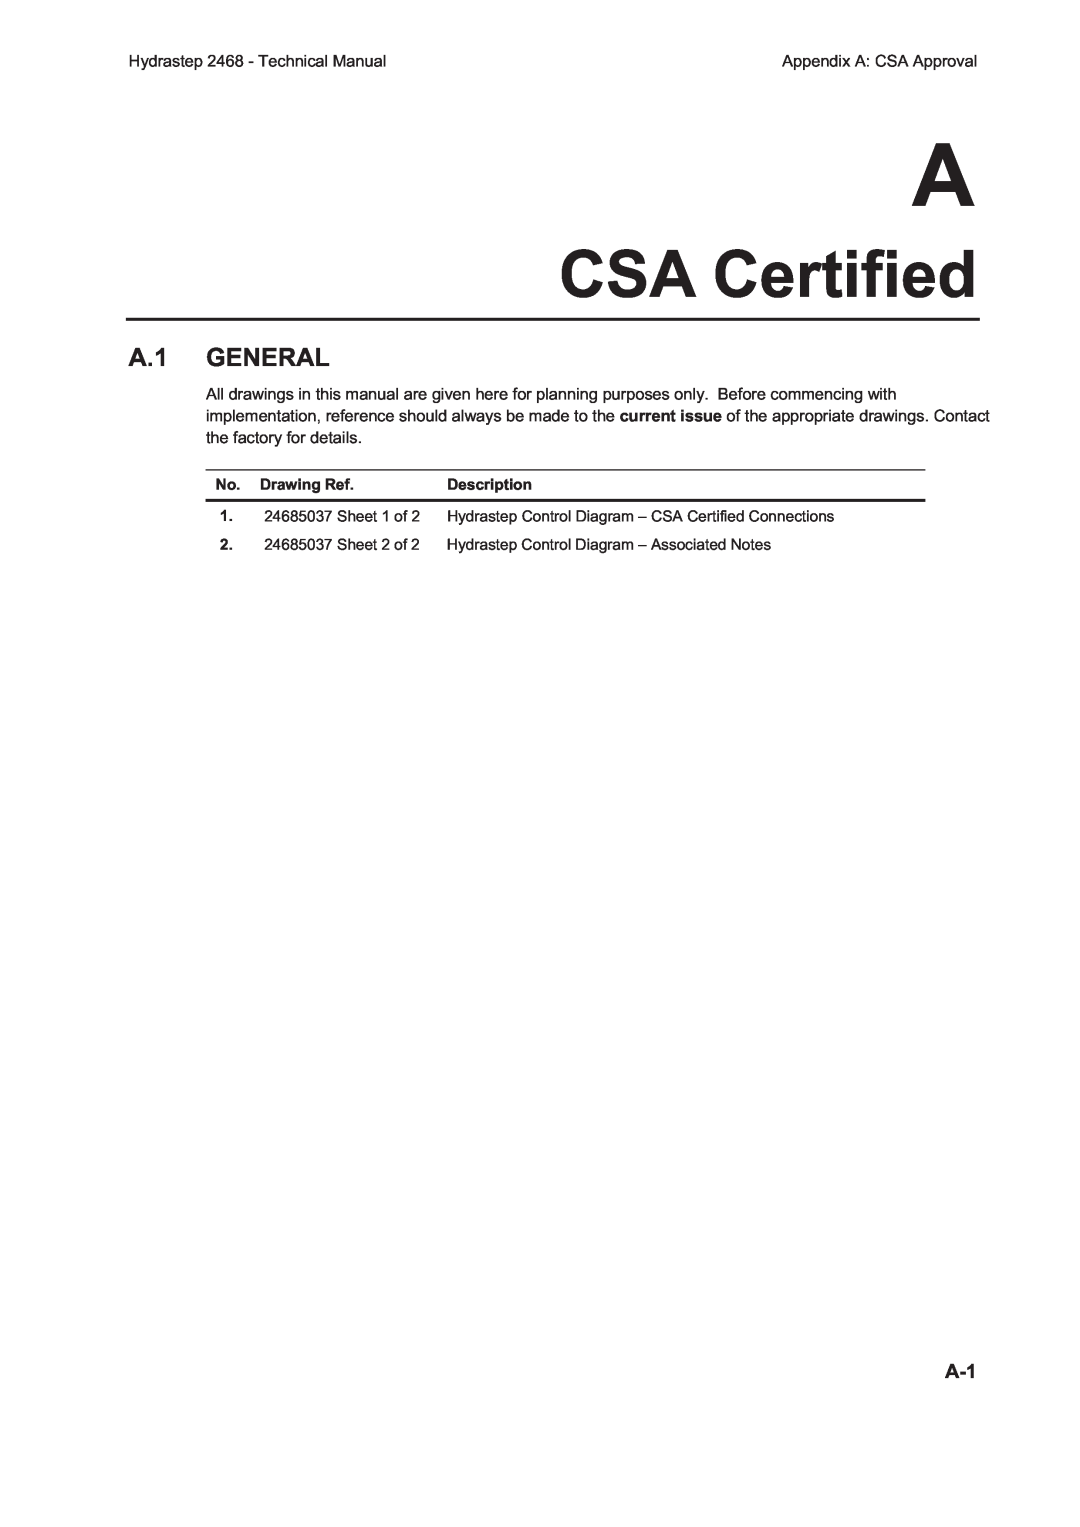 Emerson 2468CD, 2468CB manual CSA Certified, A.1 GENERAL 